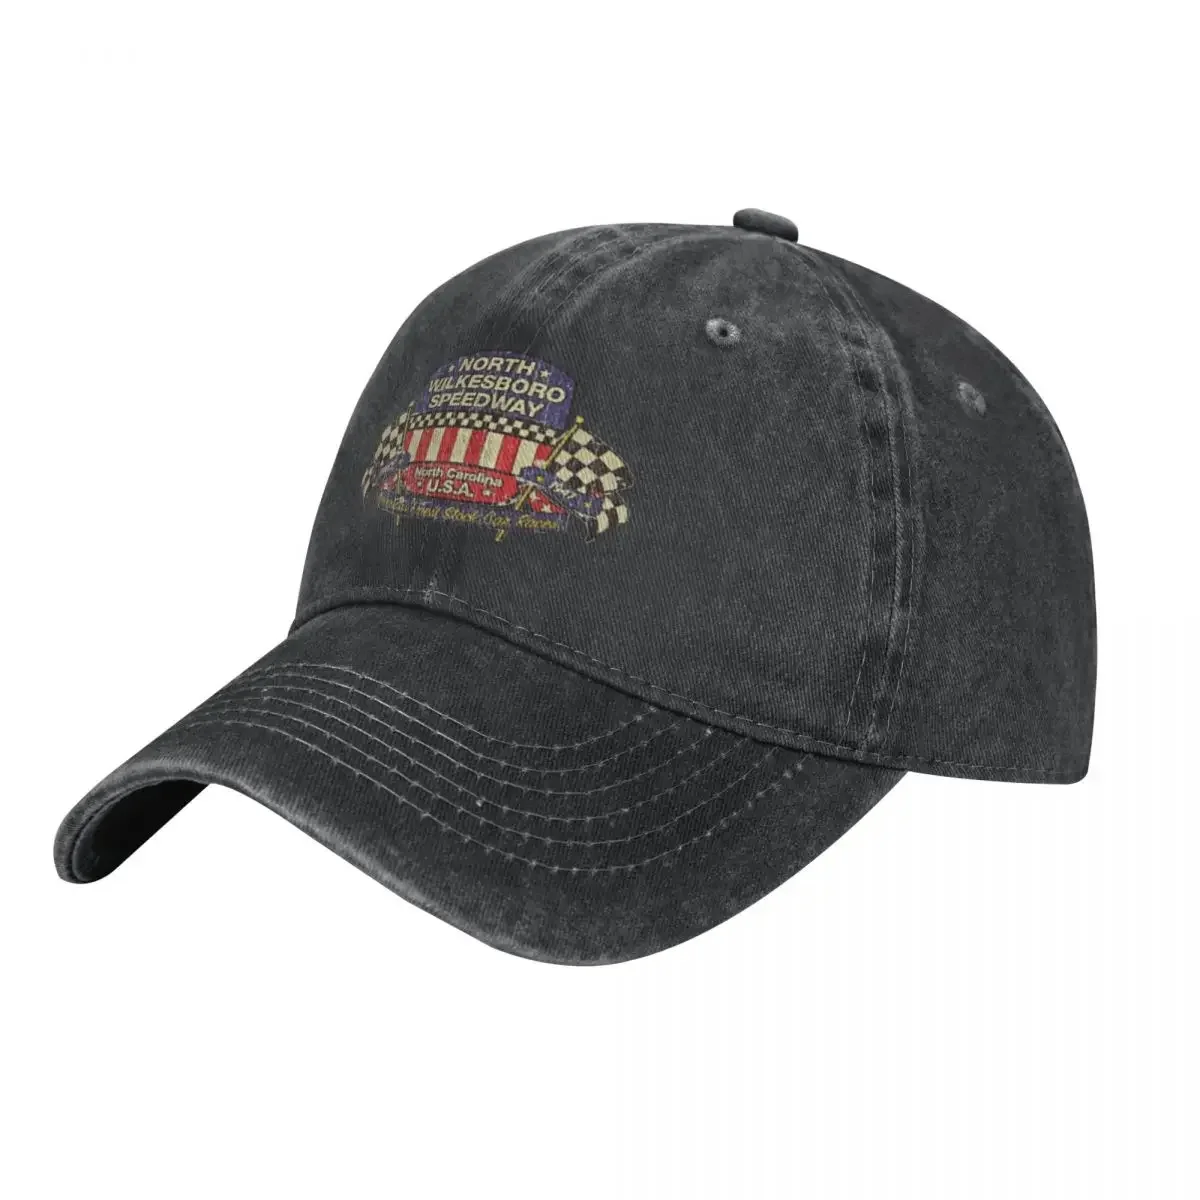 

North Wilkesboro Speedway Cowboy Hat Sunhat Snapback Cap Men Women's